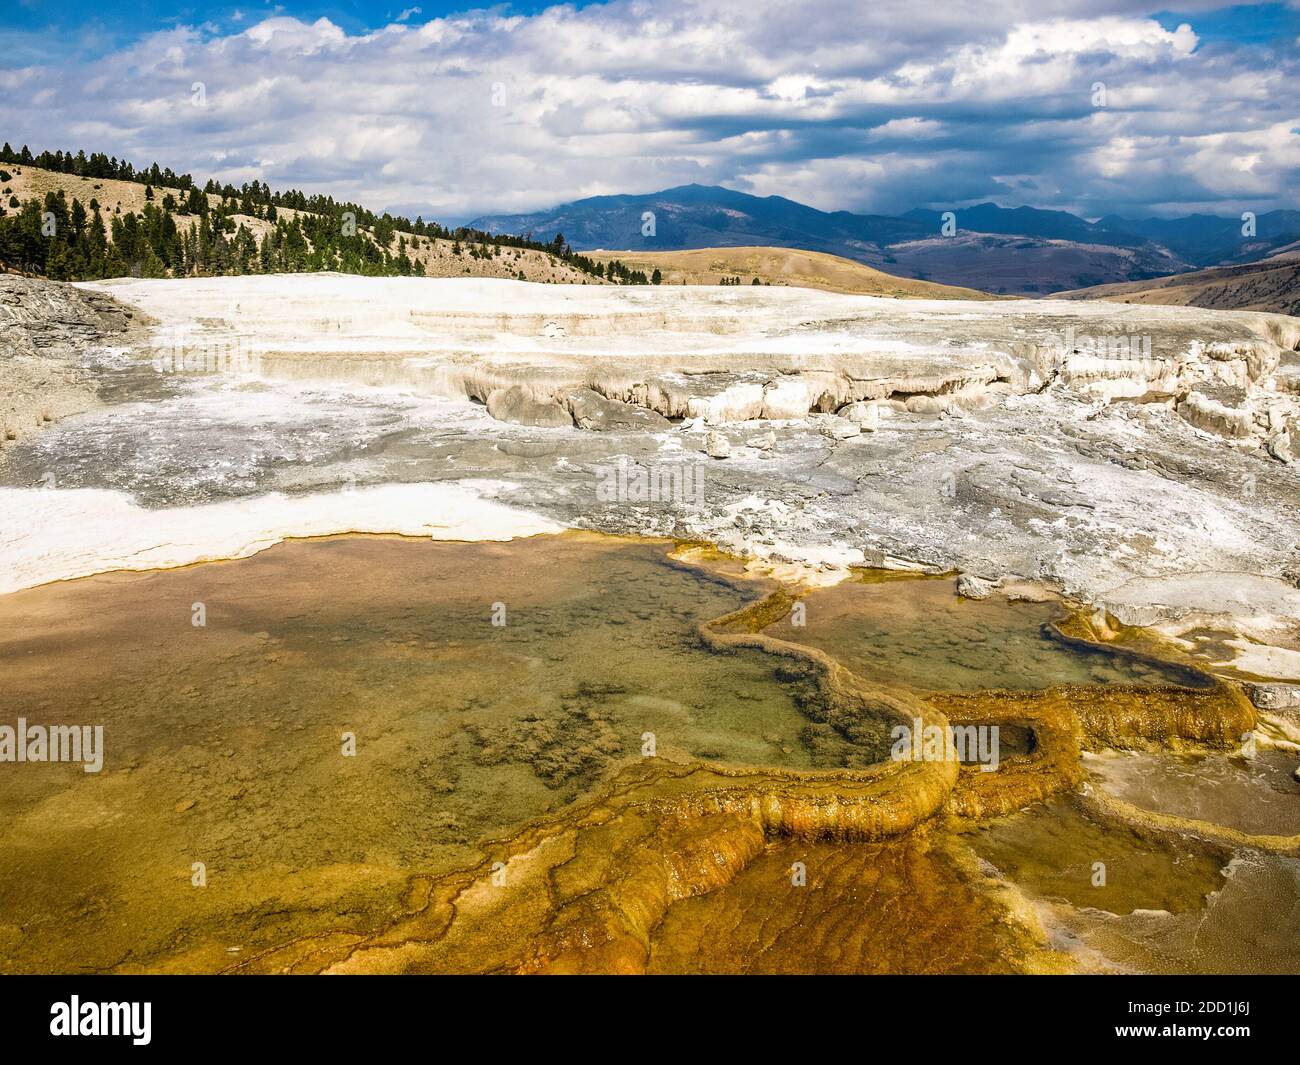 Mamoth Hot springs - sulfur springs - geological wonder, Yellow Stone National Park, MO Stock Photo